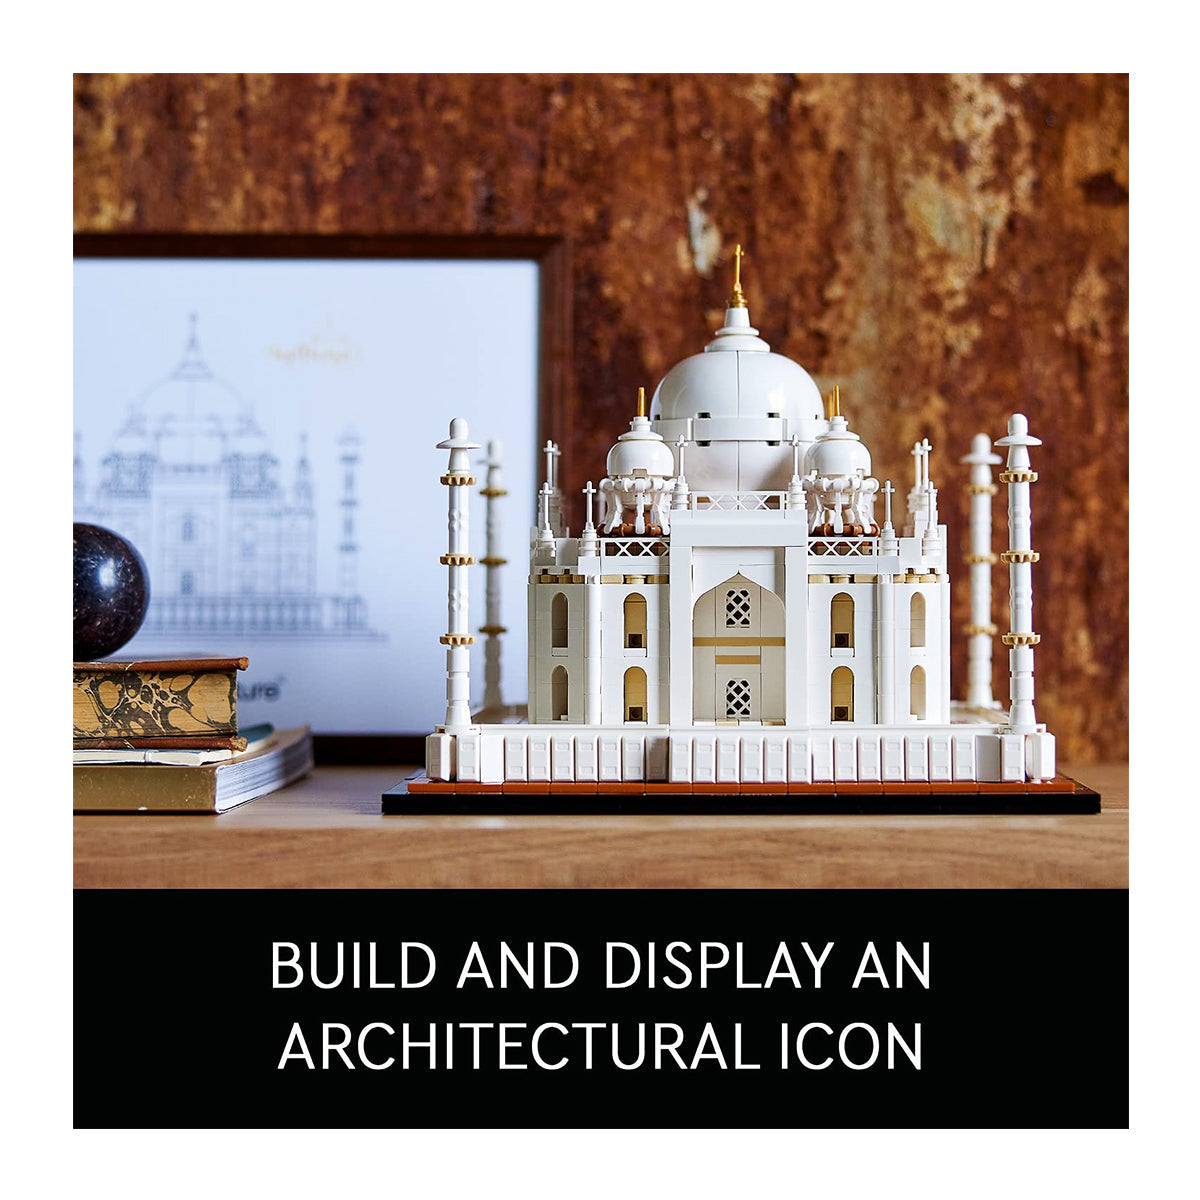 LEGO Architecture - Taj Mahal 20156